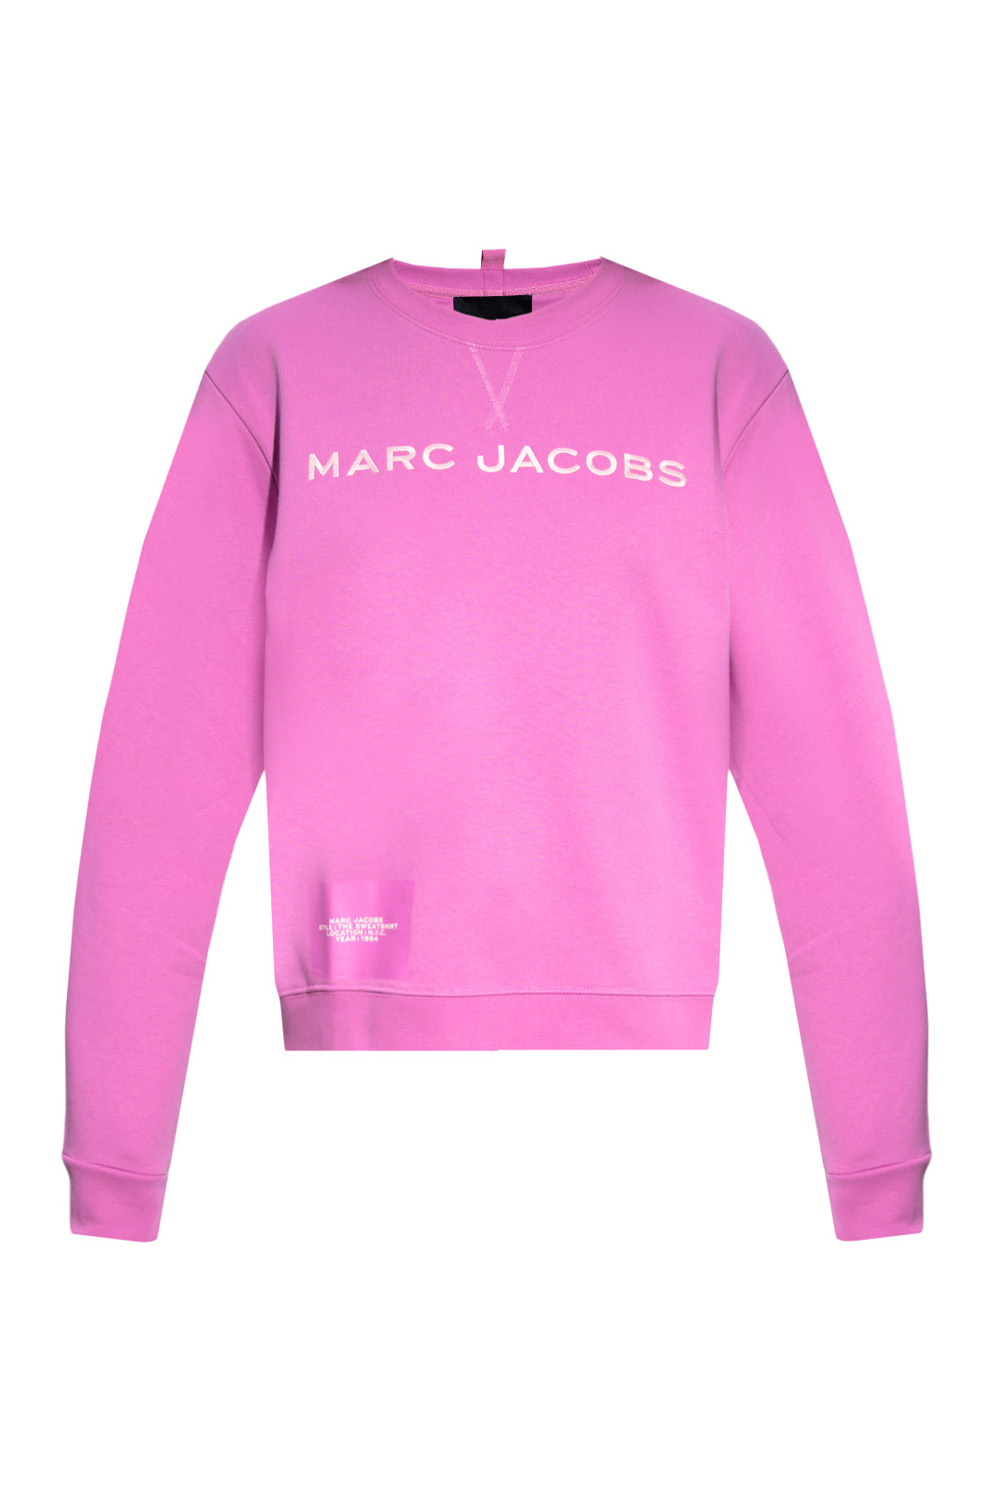 Marc Jacobs (The) Snapshot Metallic Silver Shoulder Bag Marc Jacobs Woman